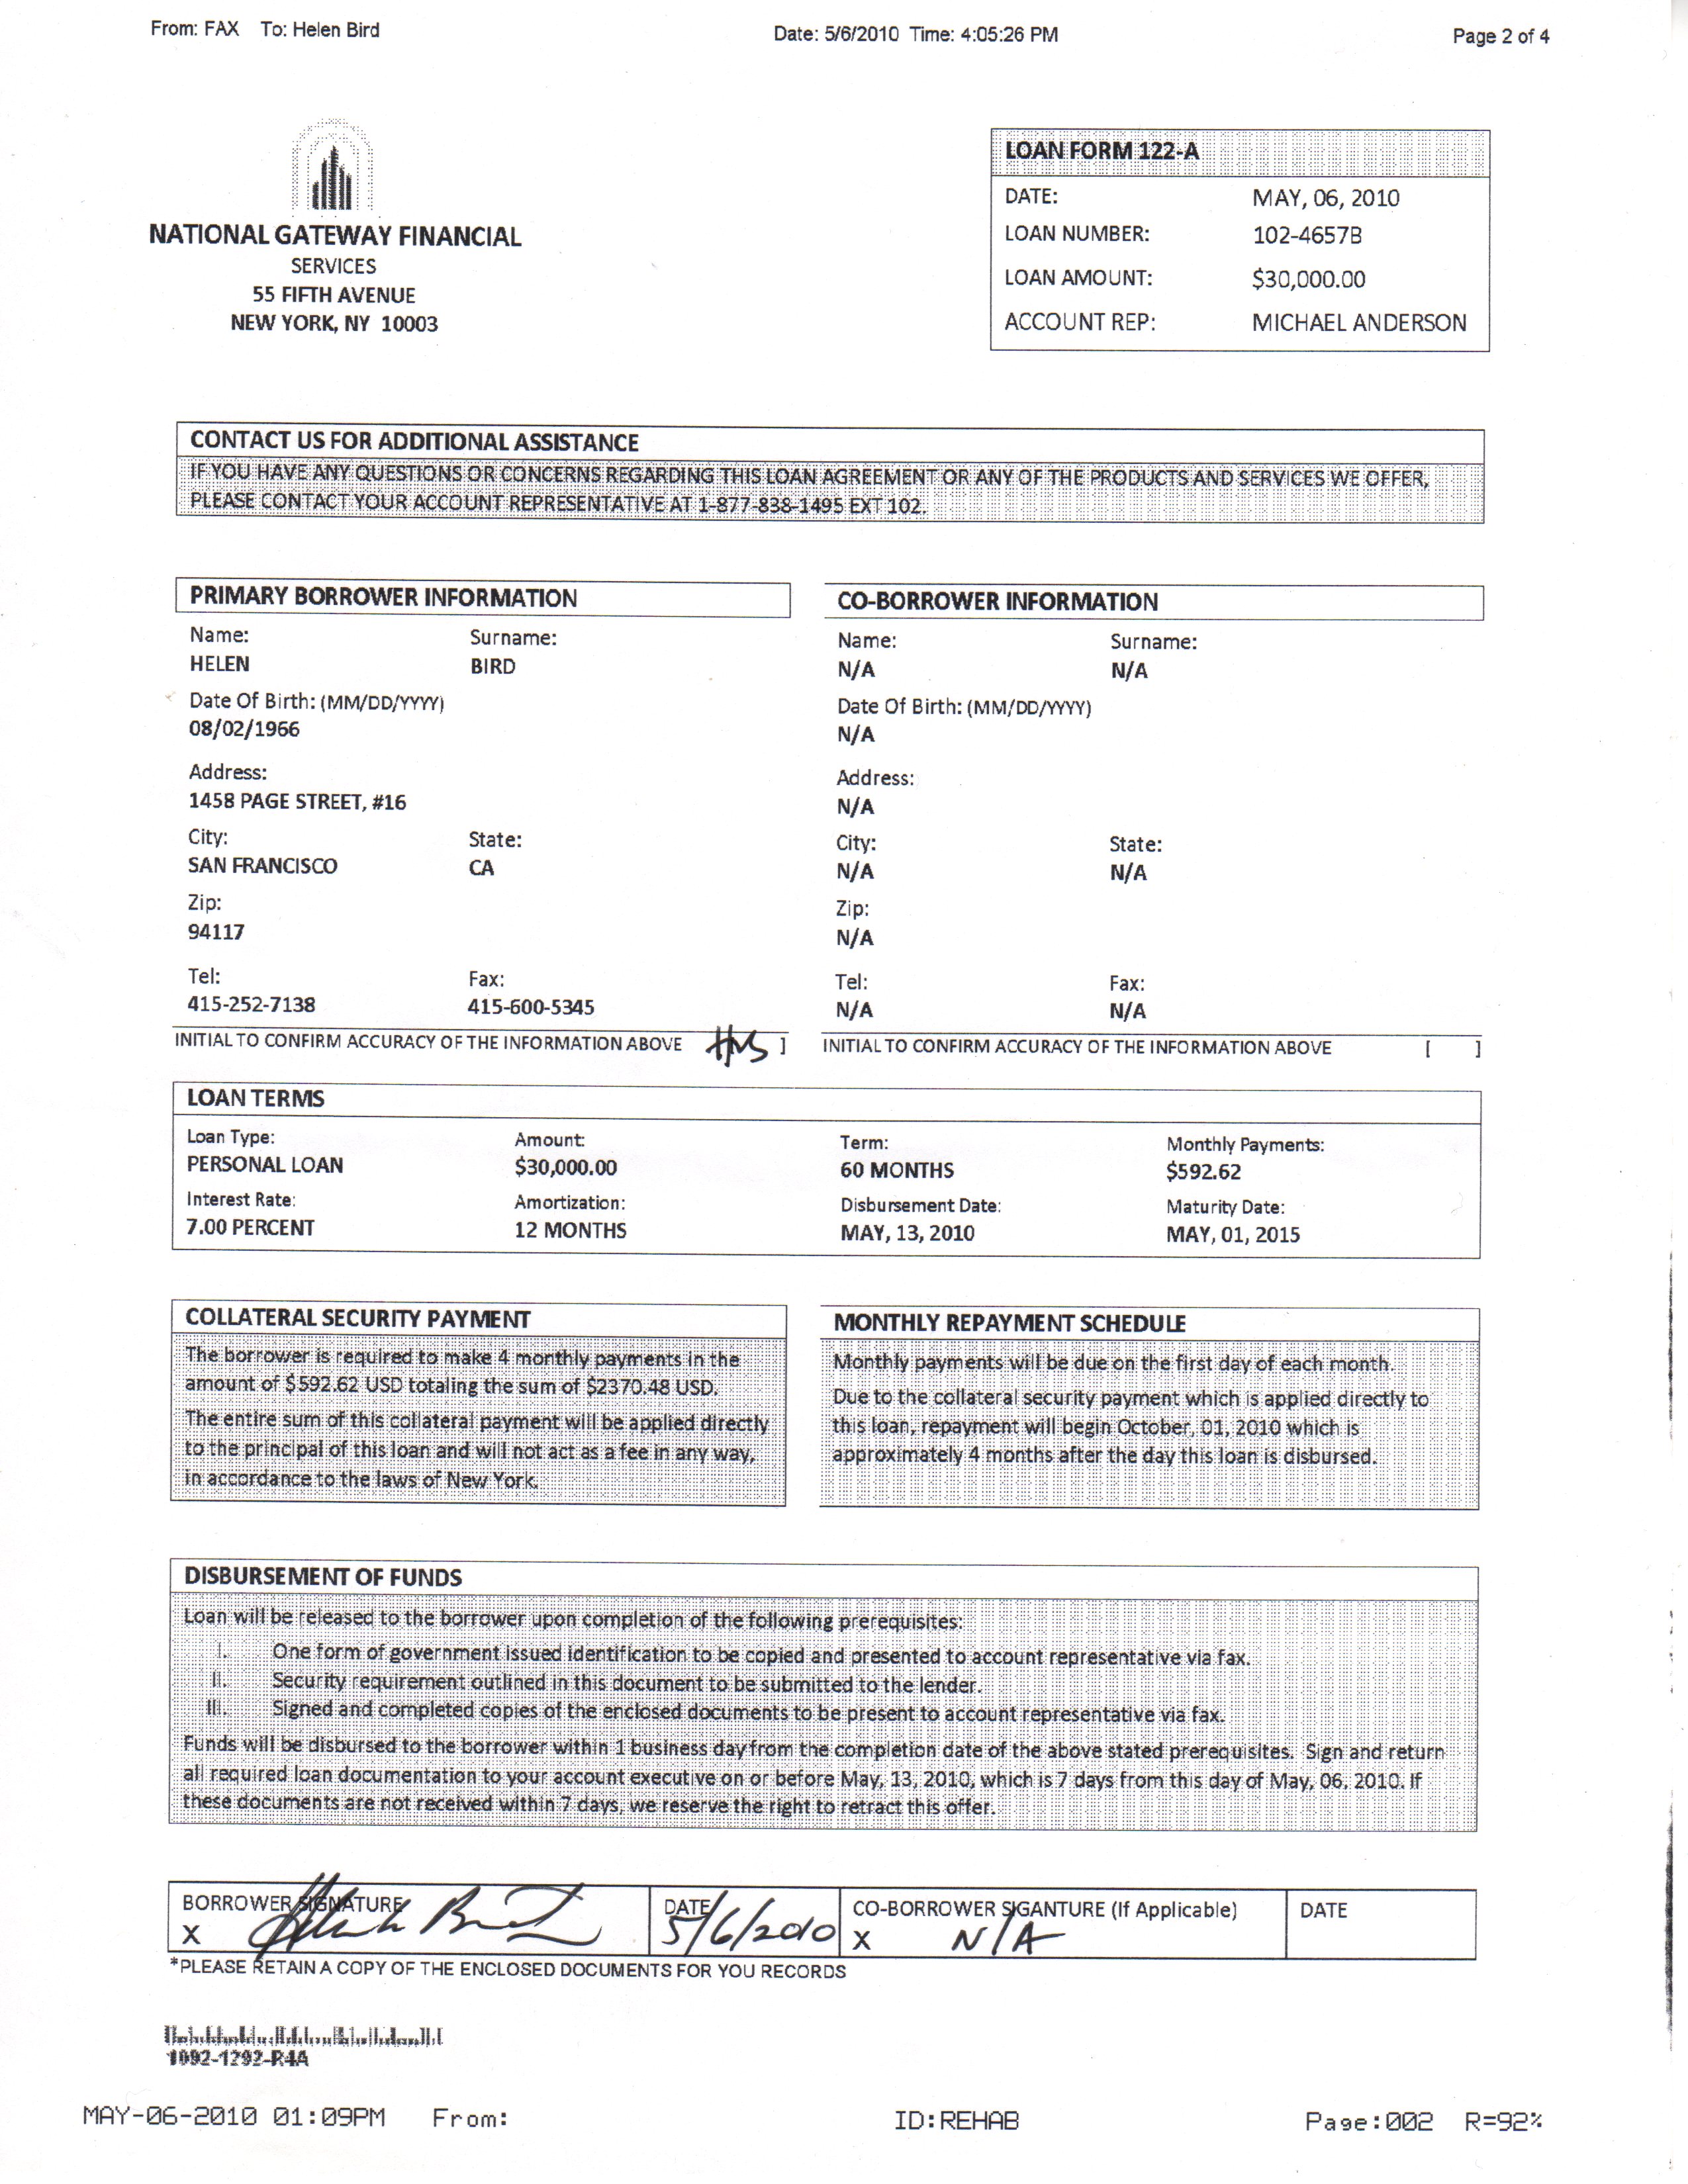 loan document with company logo